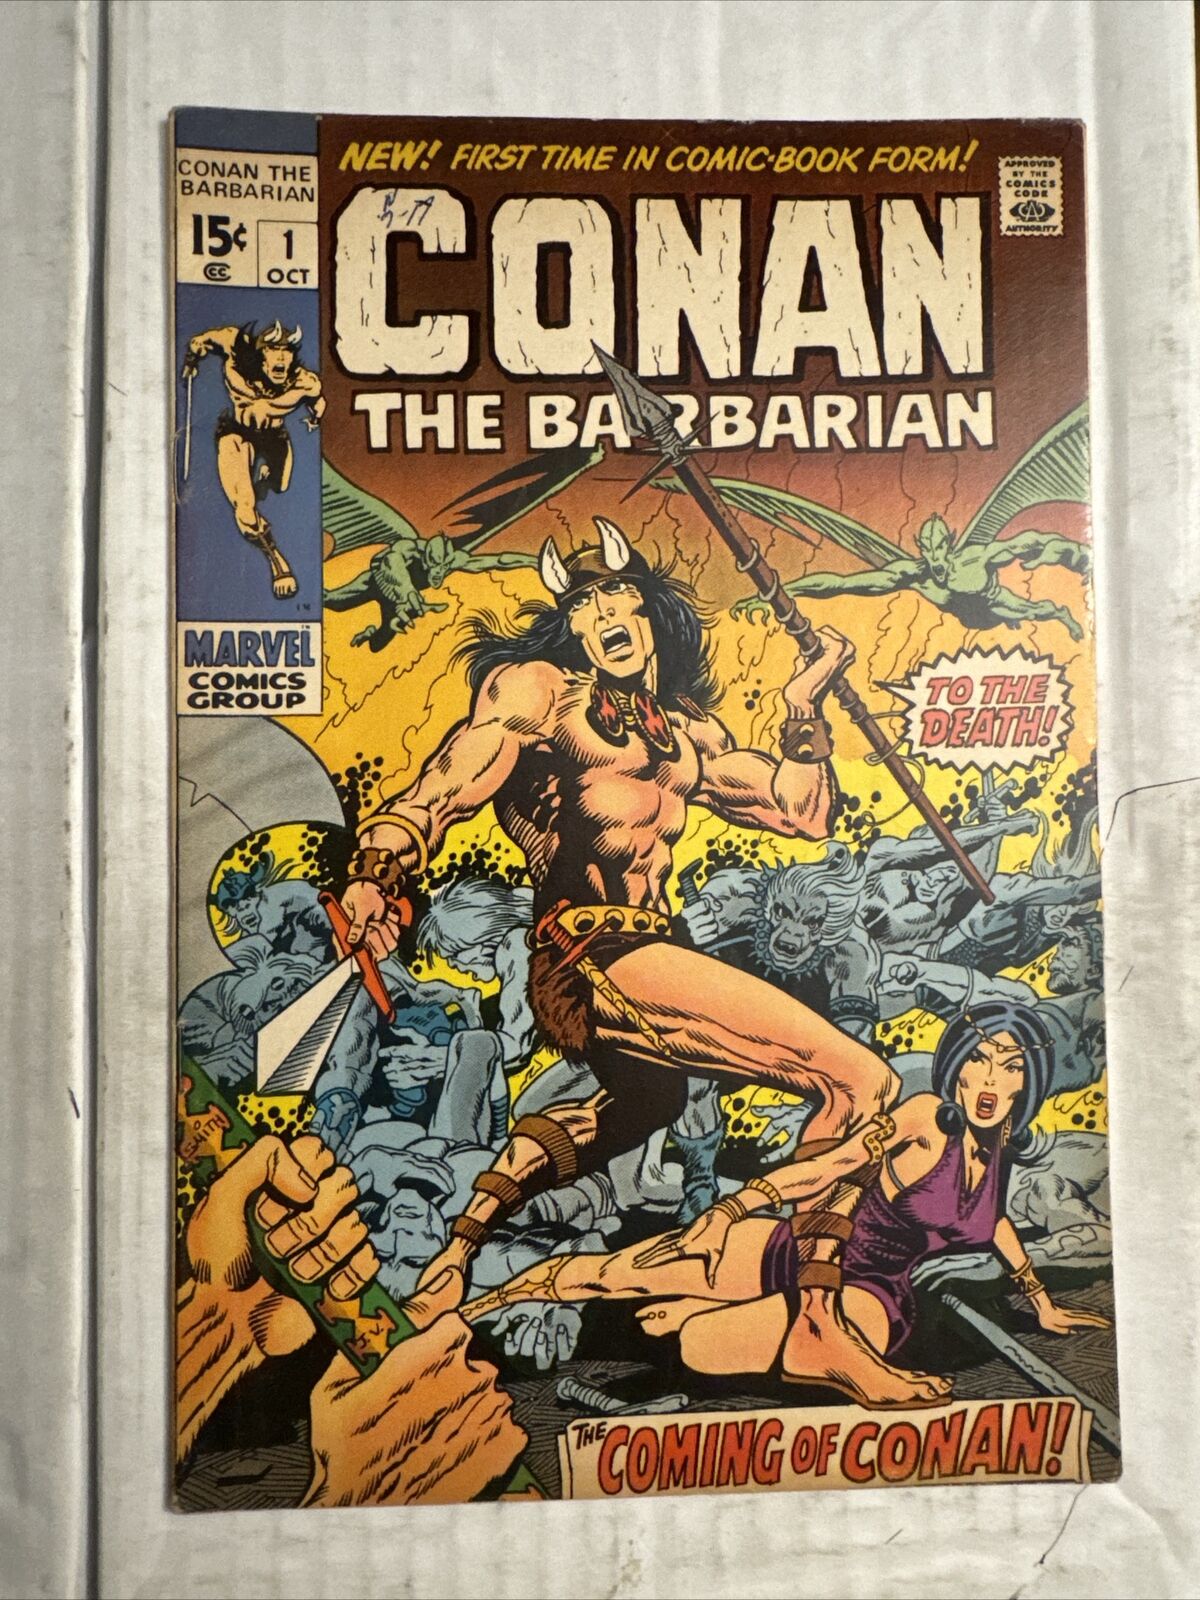 CONAN THE BARBARIAN #1 FN/VF 1970 Marvel Barry Windsor-Smith Art, Roy Thomas